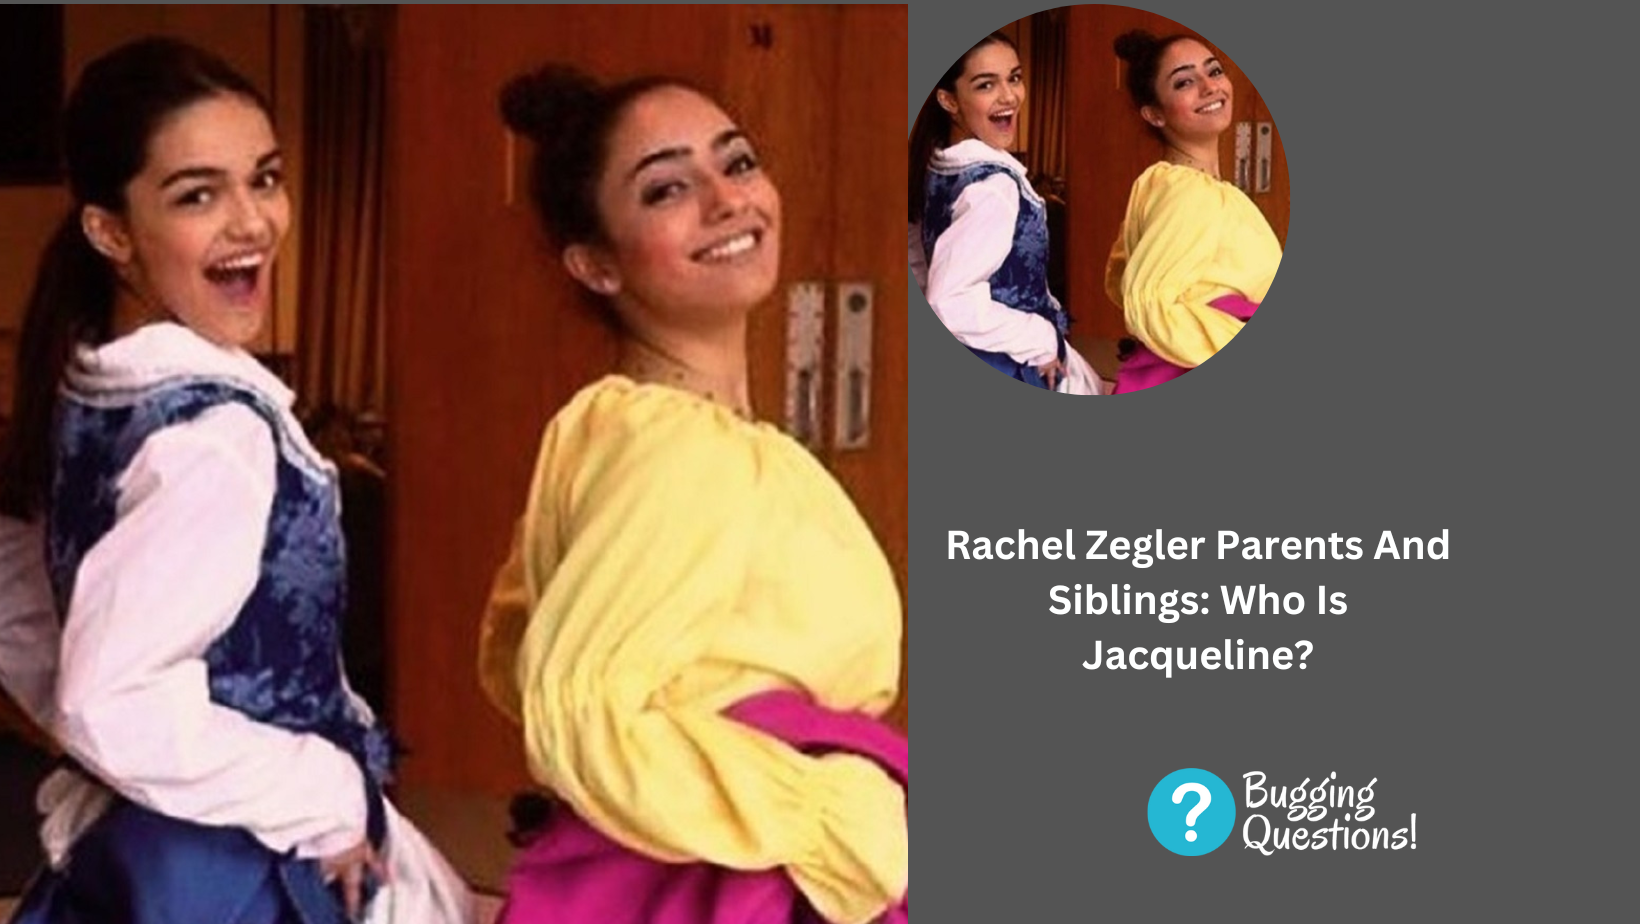 Rachel Zegler Parents And Siblings: Who Is Jacqueline?